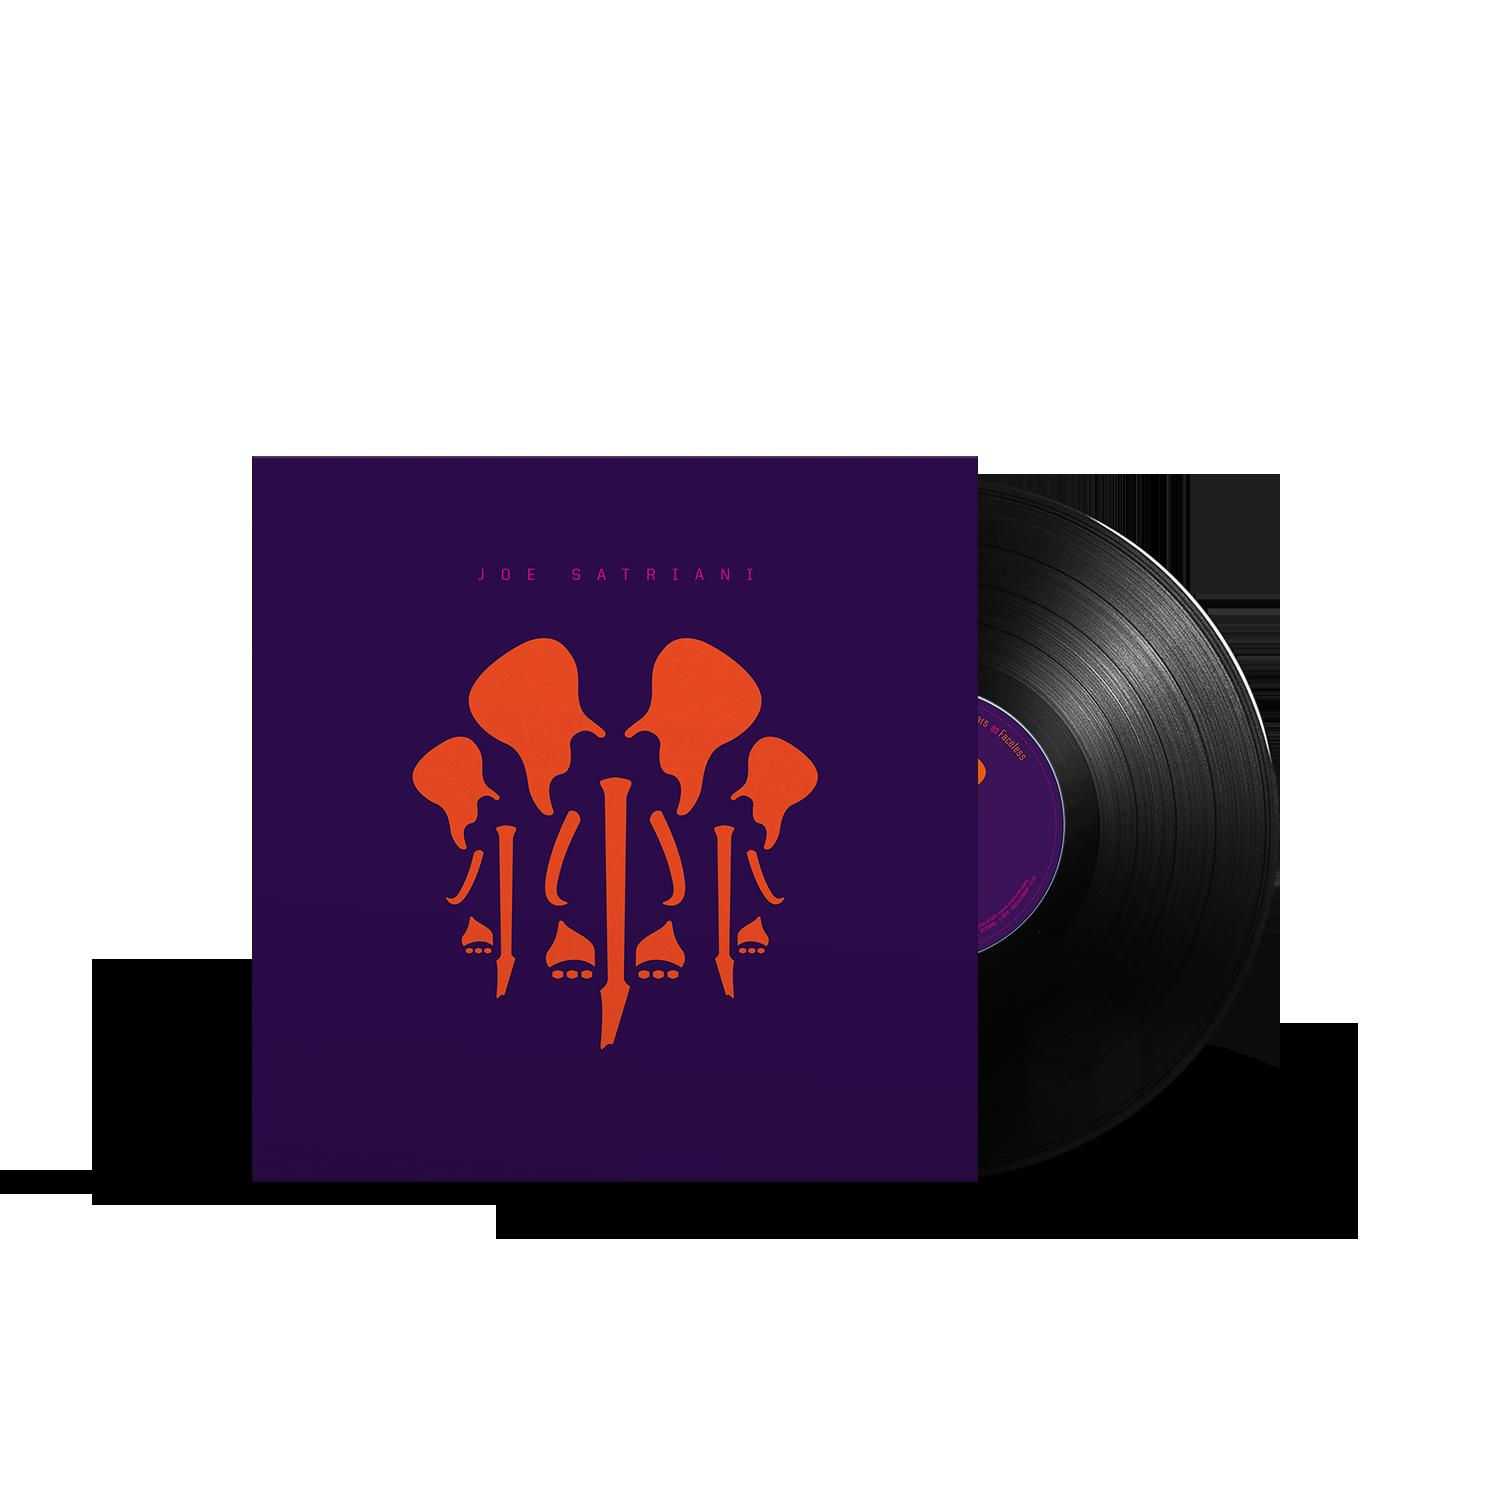 of Mars - Elephants Joe - (Vinyl) Satriani The